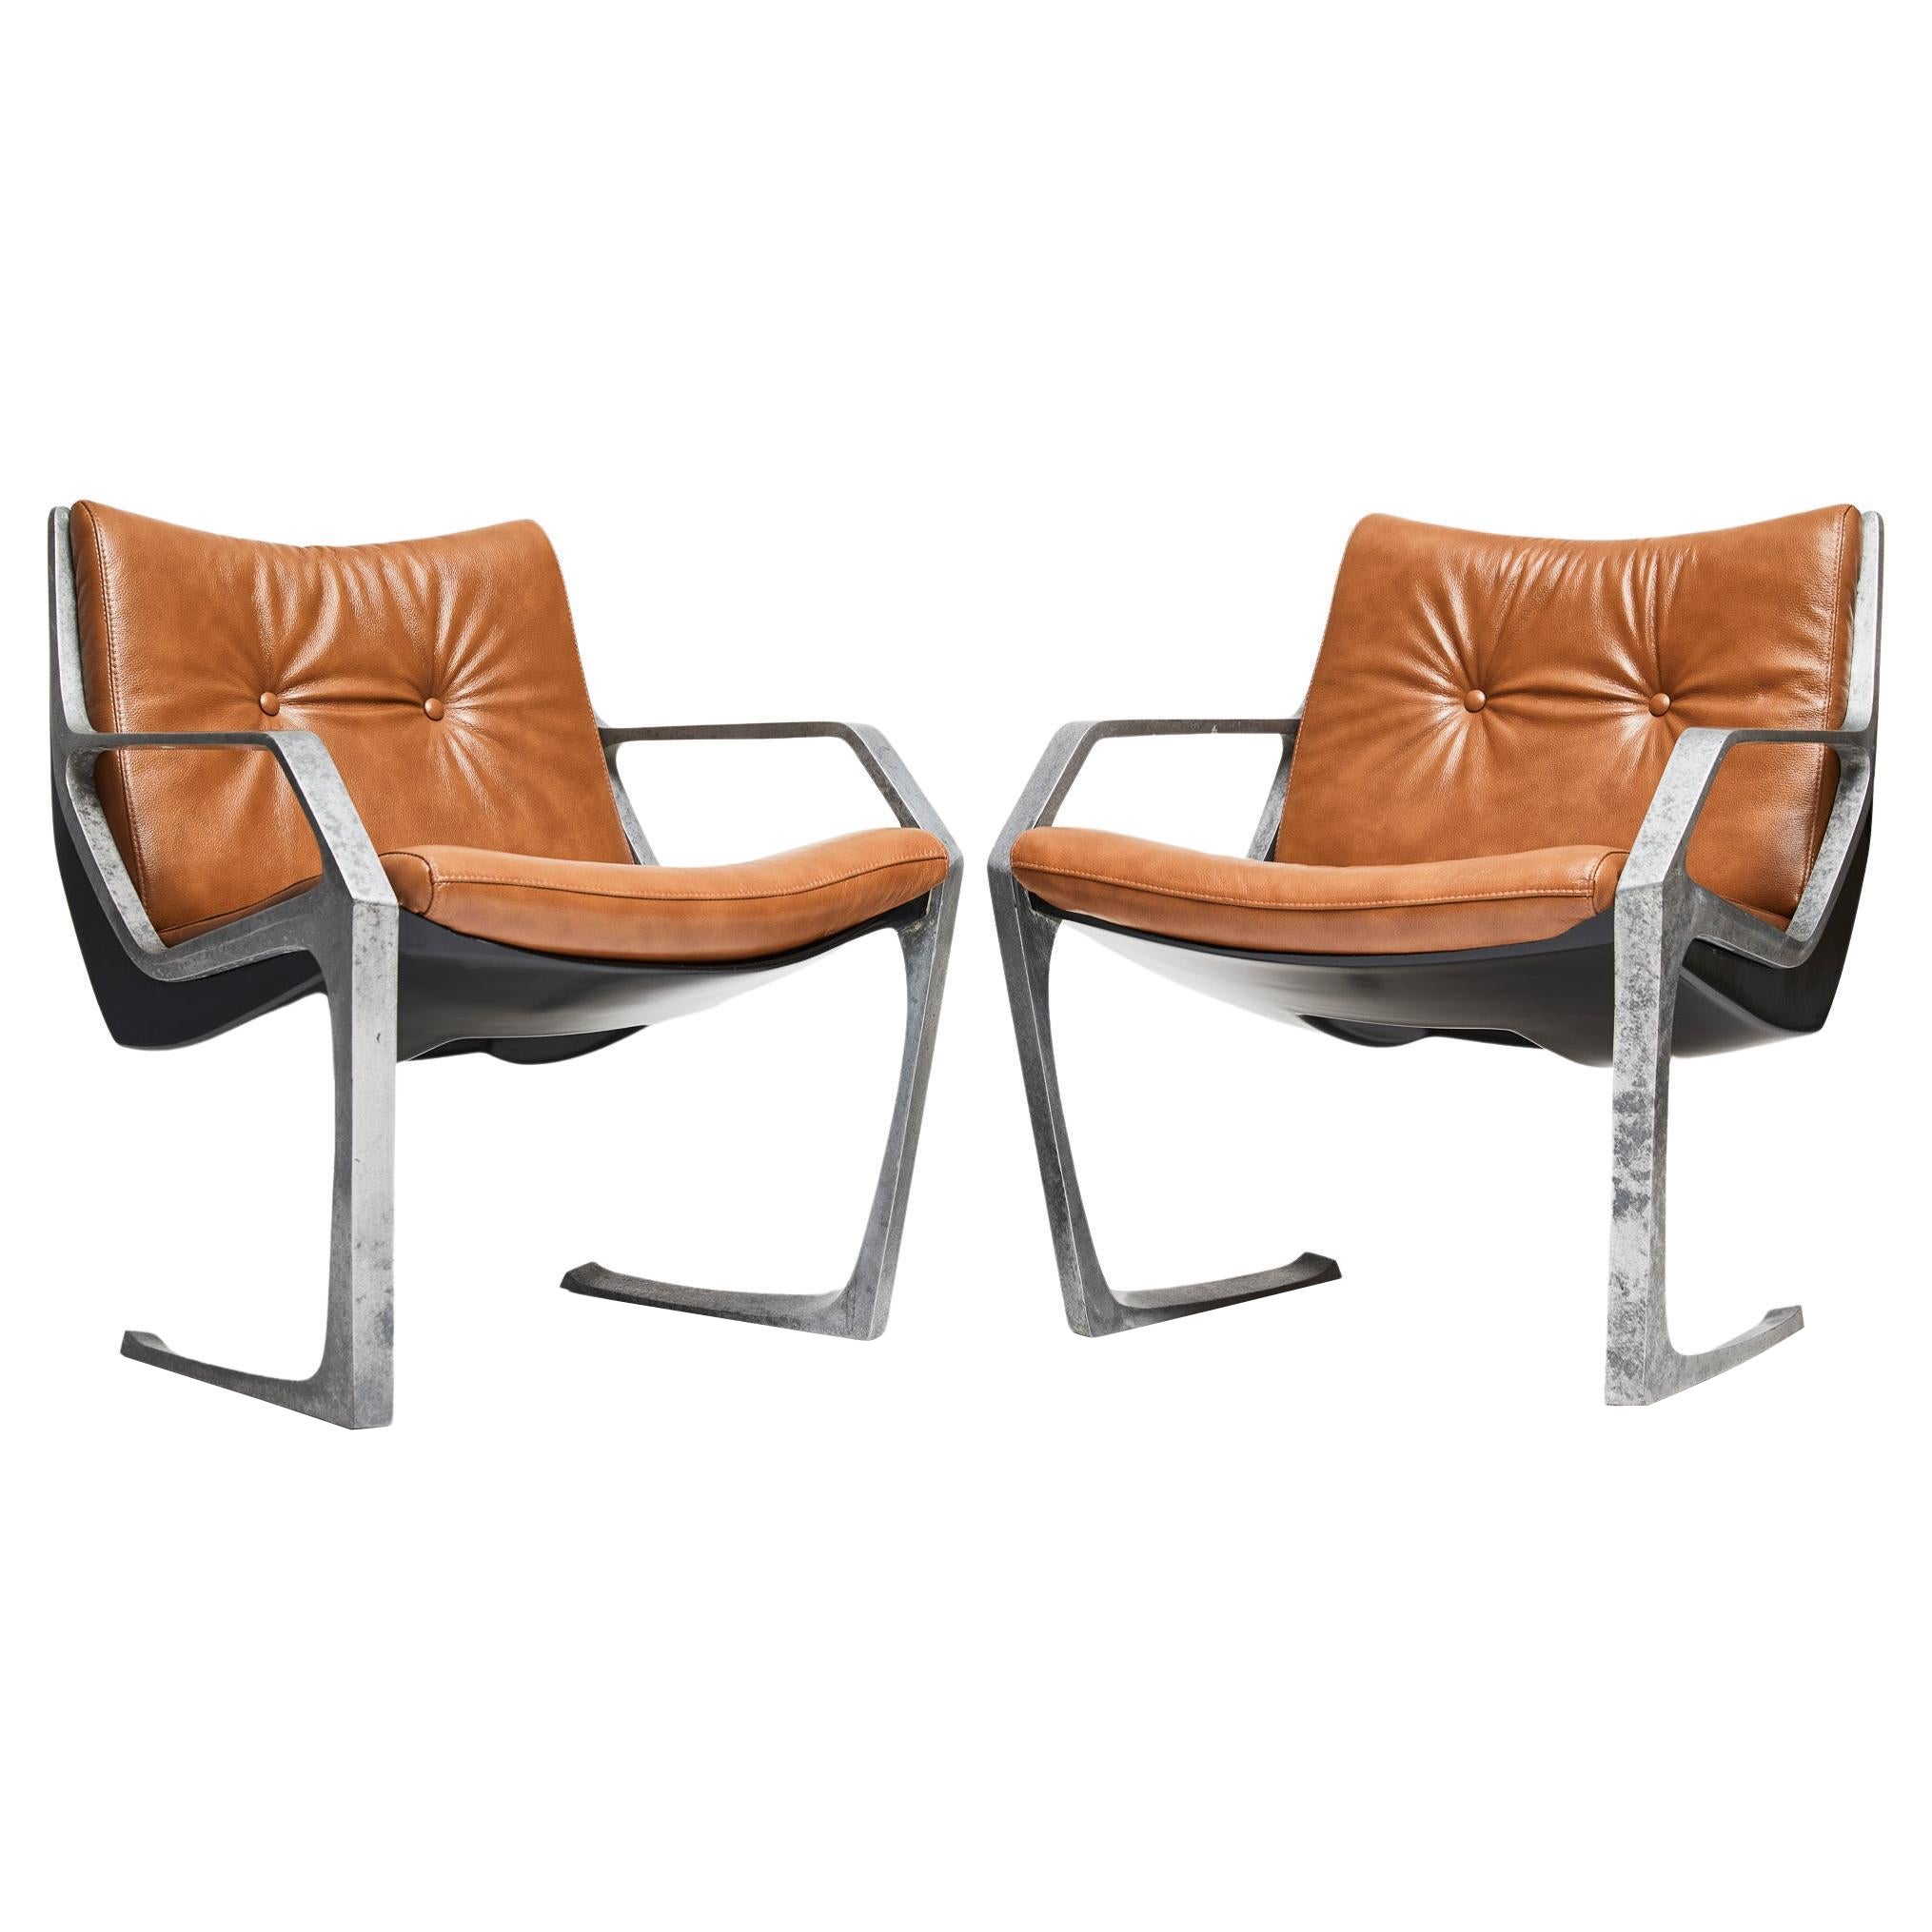 Mid-Century Modern Armchairs in Aluminum & Brown Leather. Jorge Zalszupin Brazil